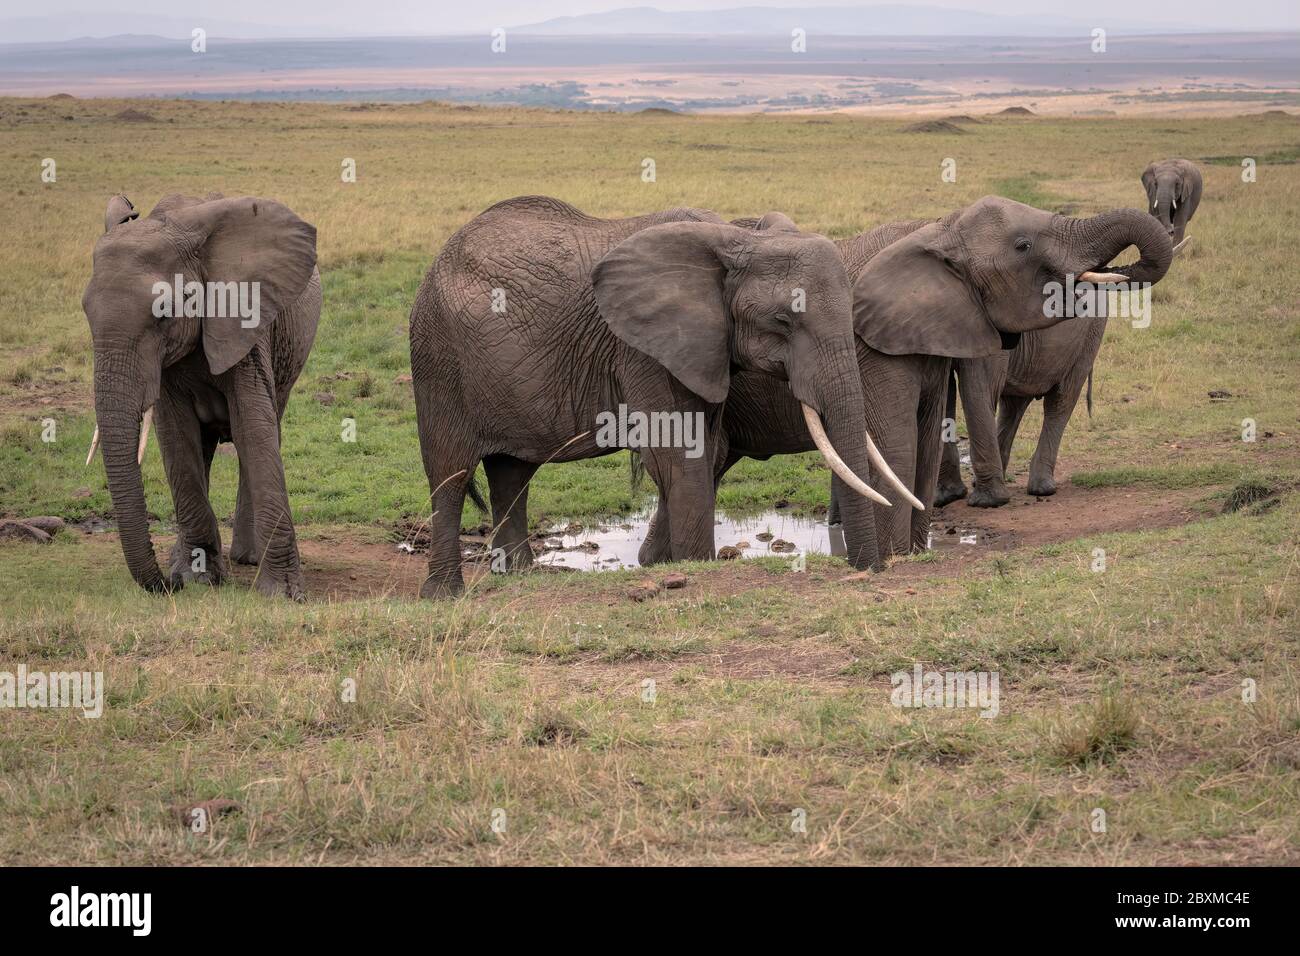 Small herd of elephants gathered around a watering hole drinking water. Image taken in the Maasai Mara, Kenya. Stock Photo